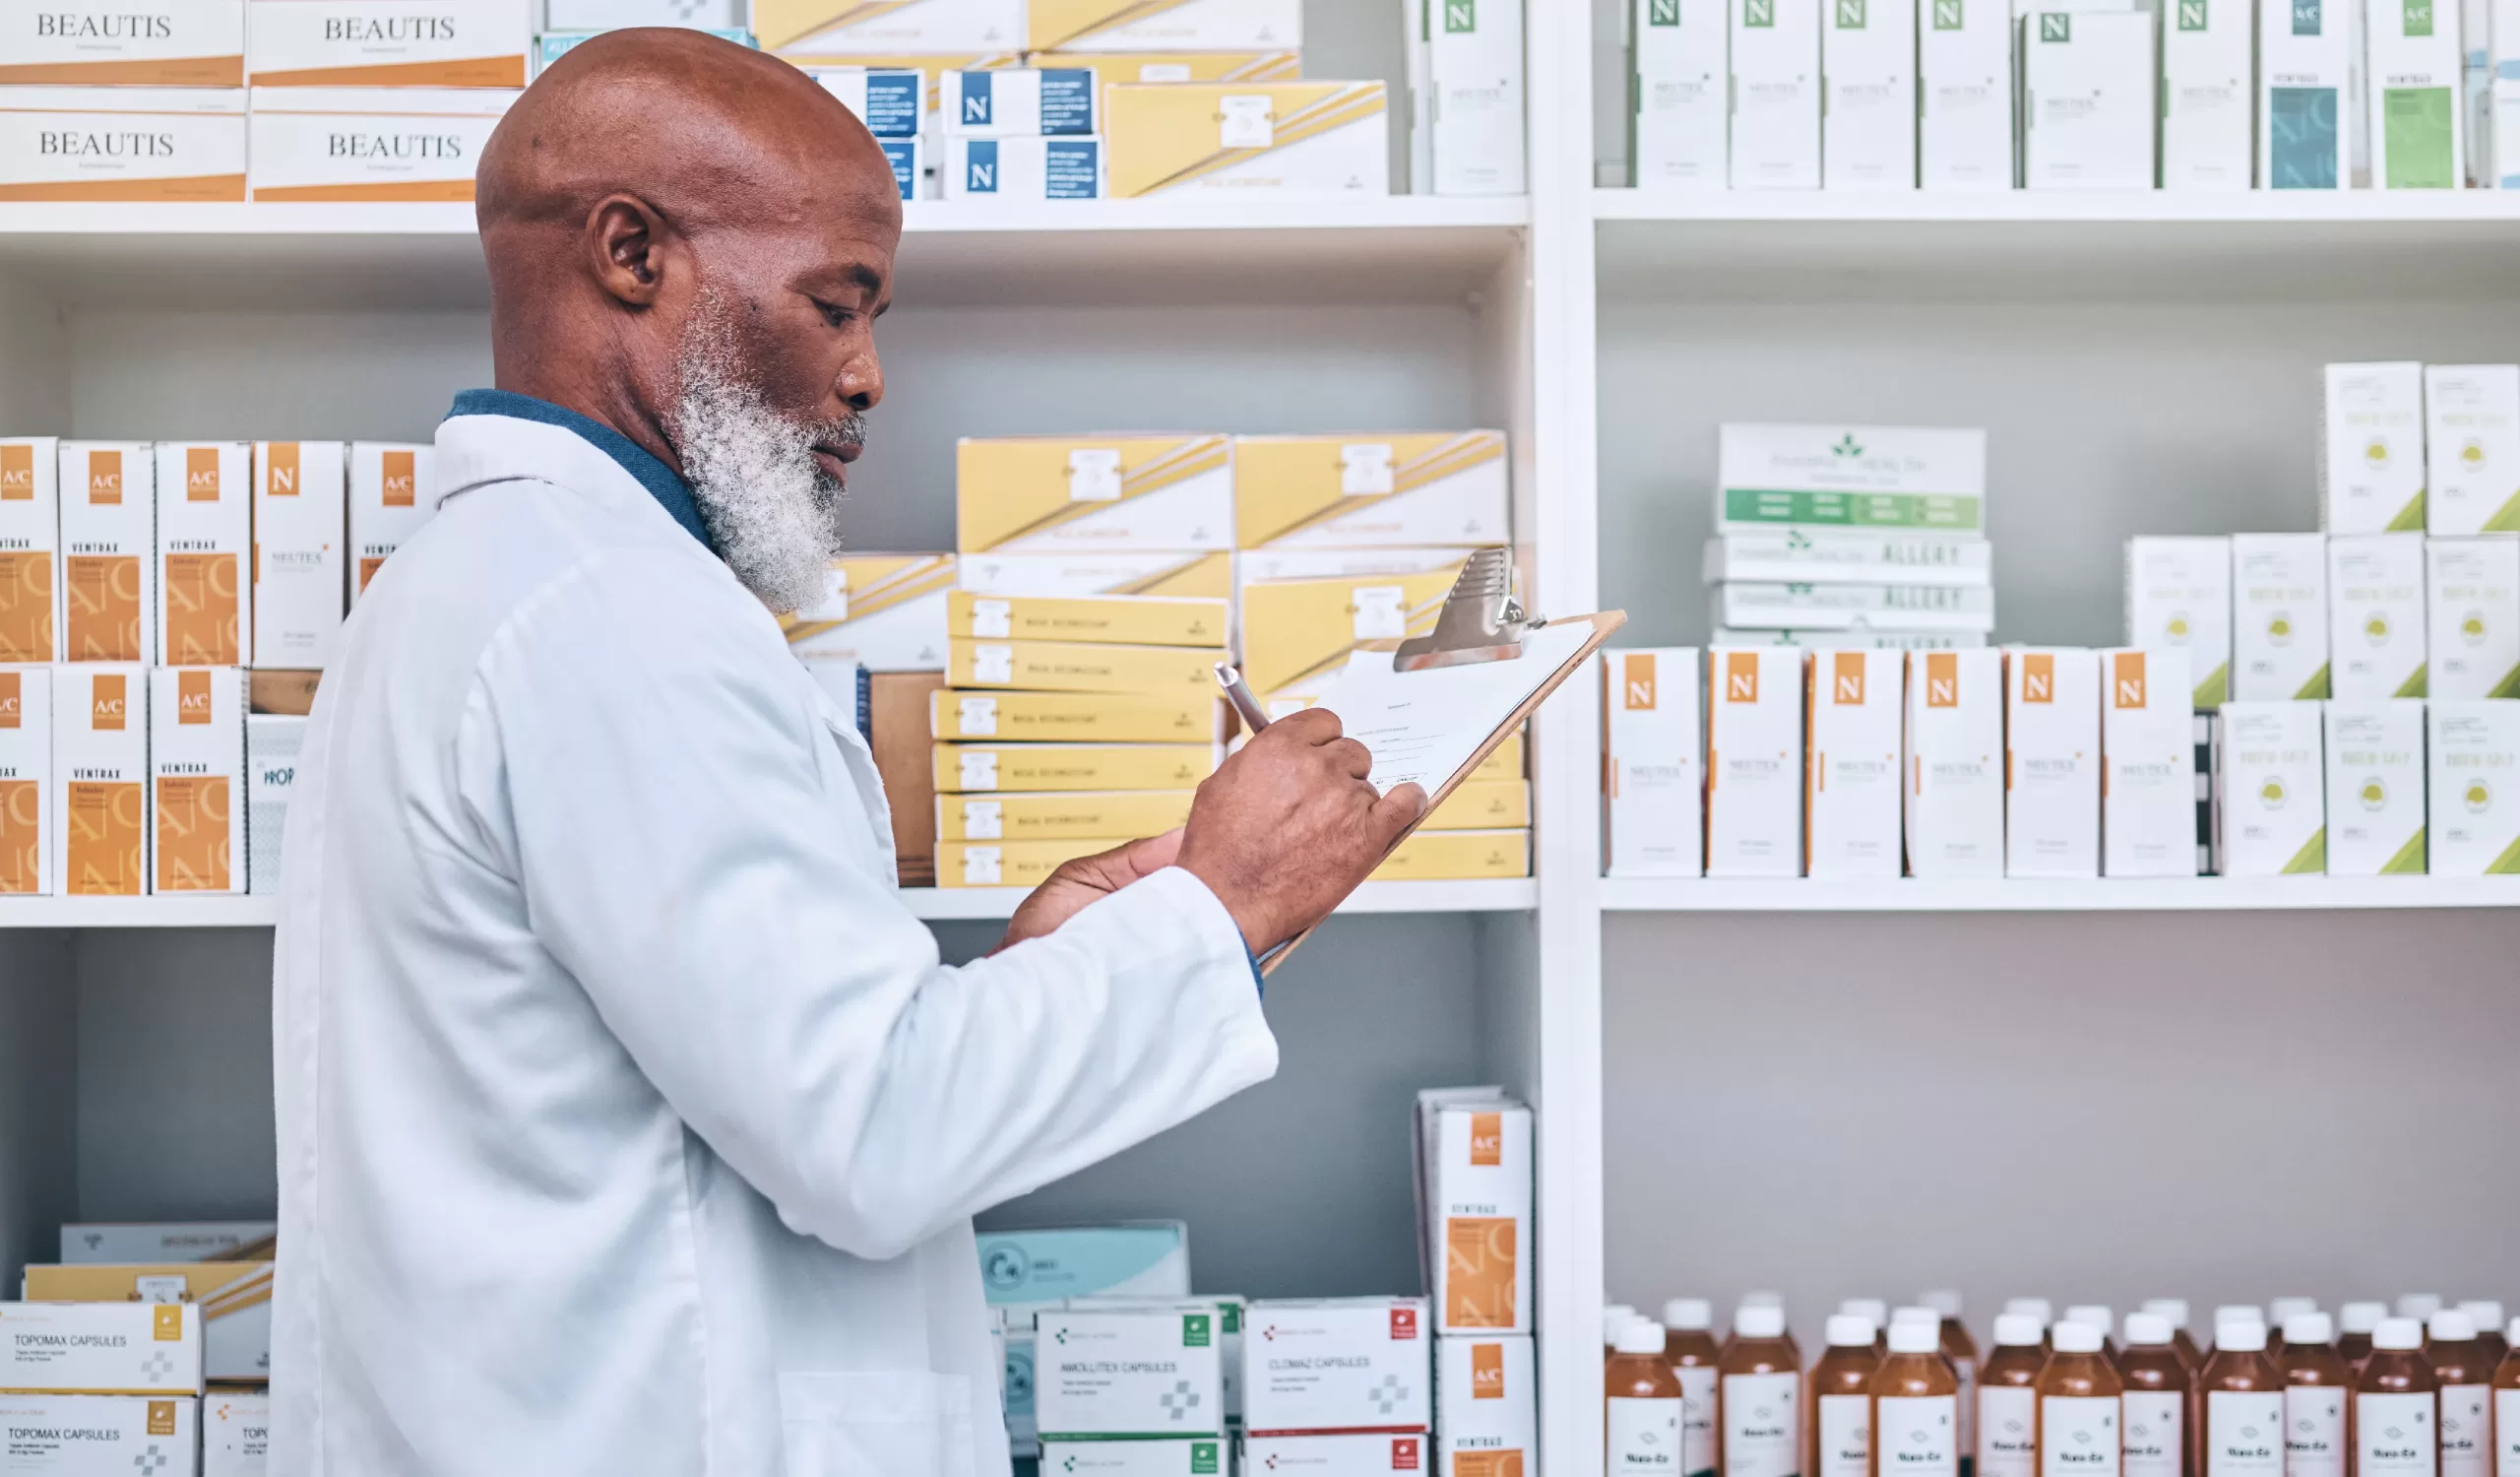 Pharmacist checking pharmaceutical inventory